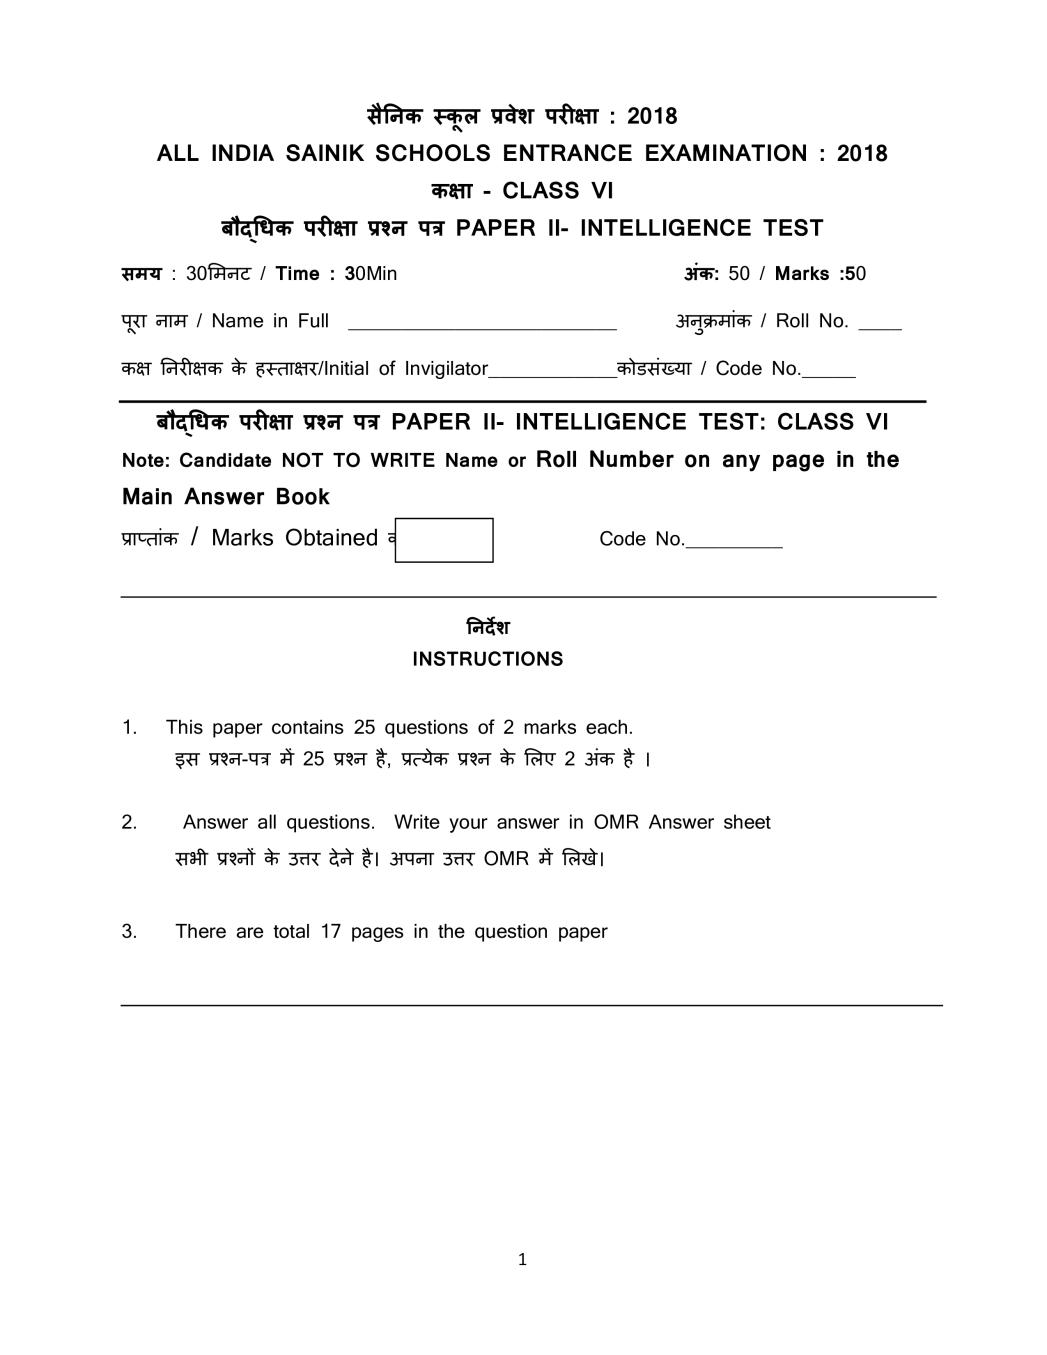 AISSEE 2018 Question Paper for Class 6 |  Sainik School Entrance Exam (Paper 2) - Page 1